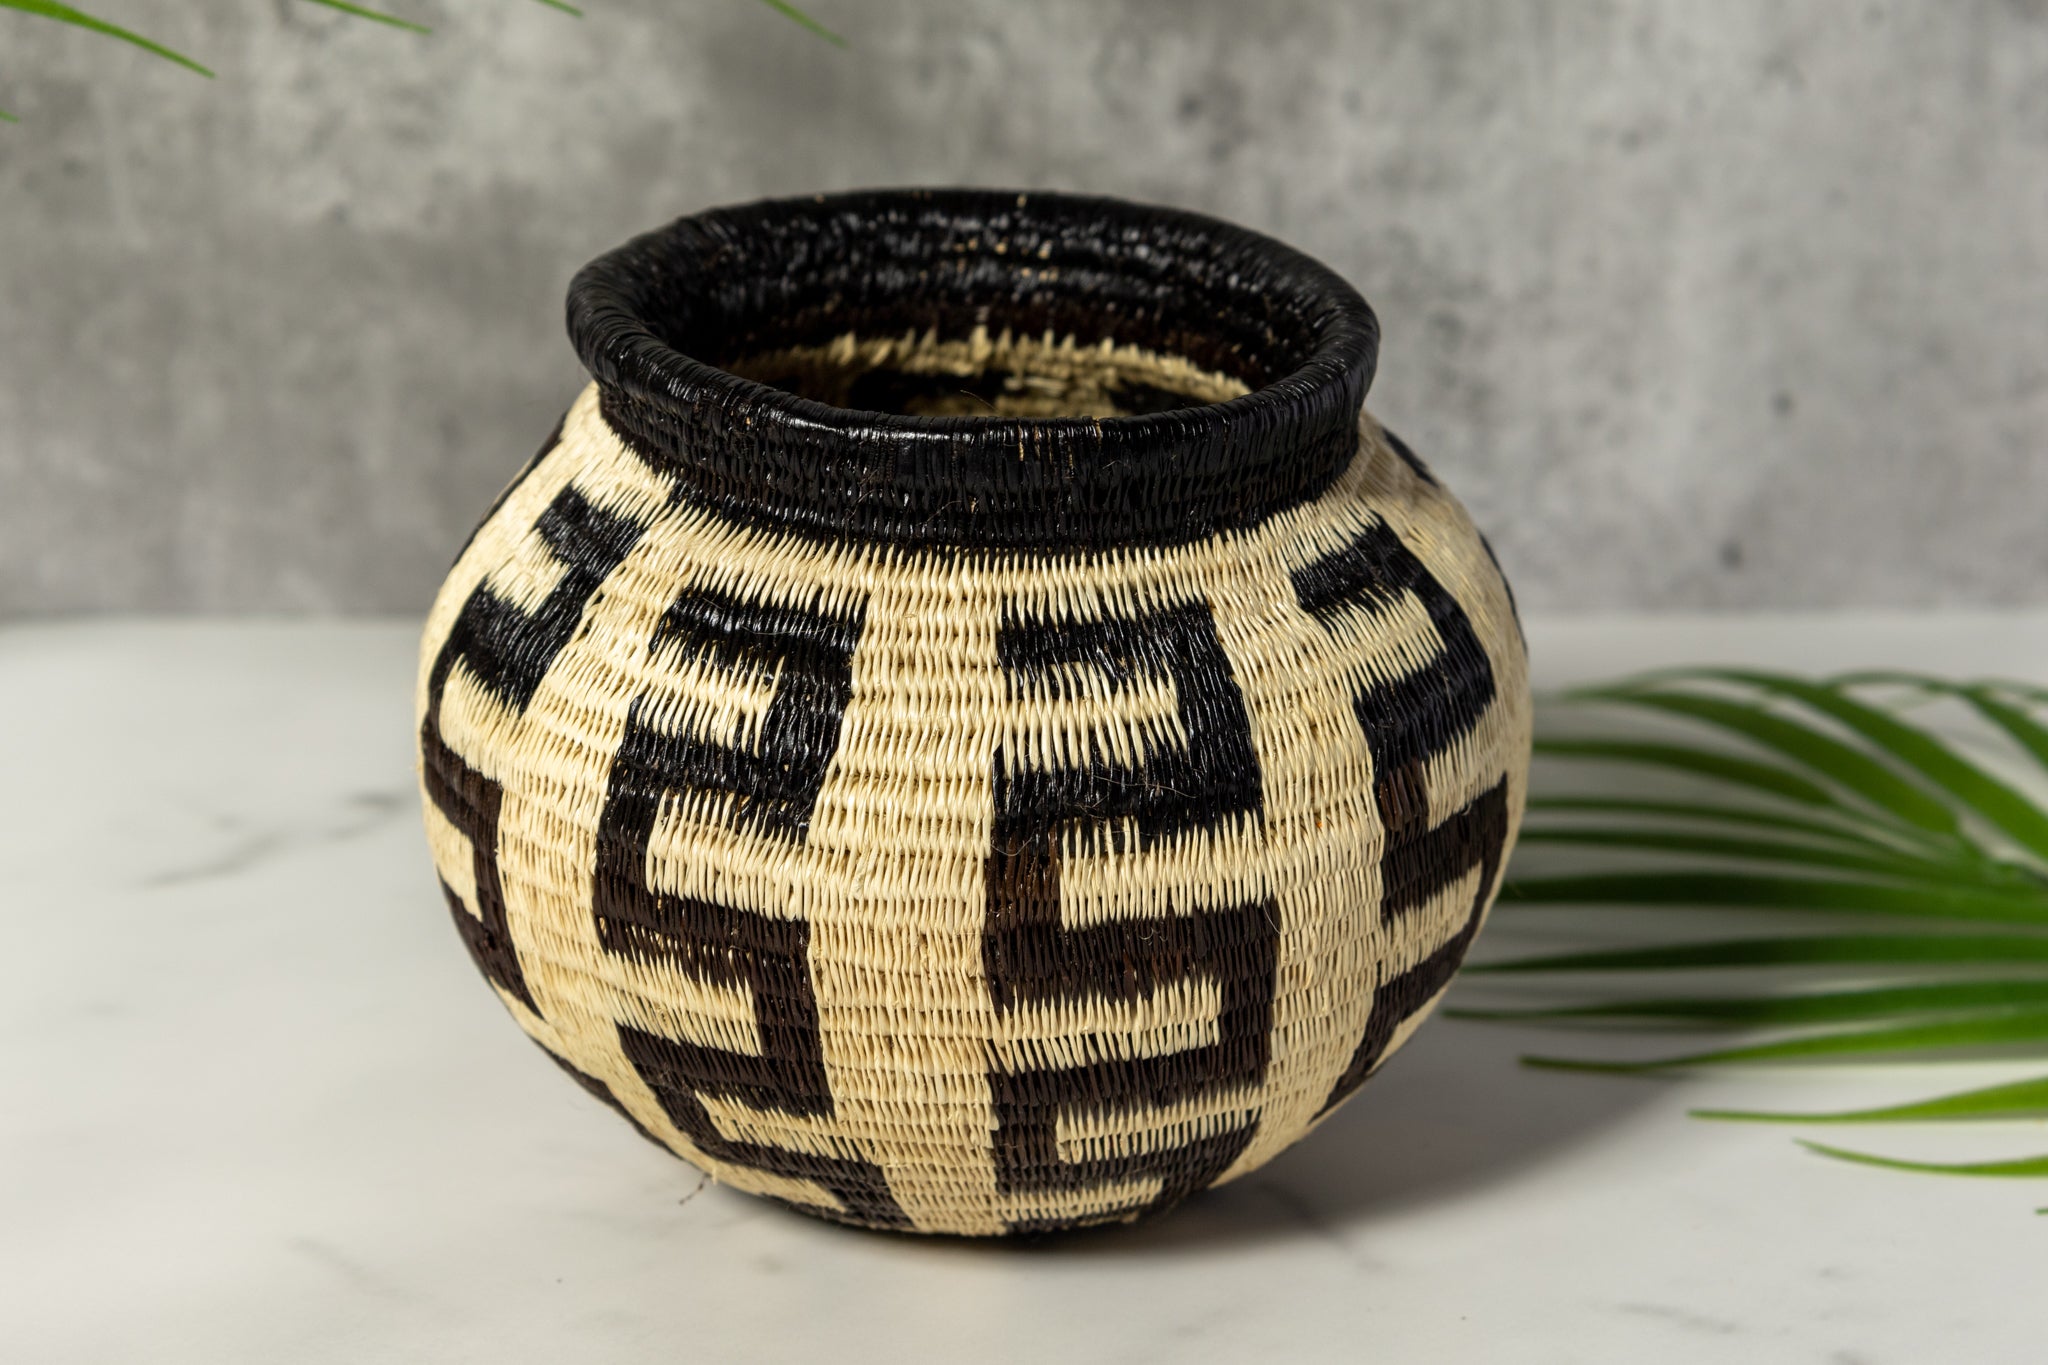 Black And White Southwest Design Woven Basket